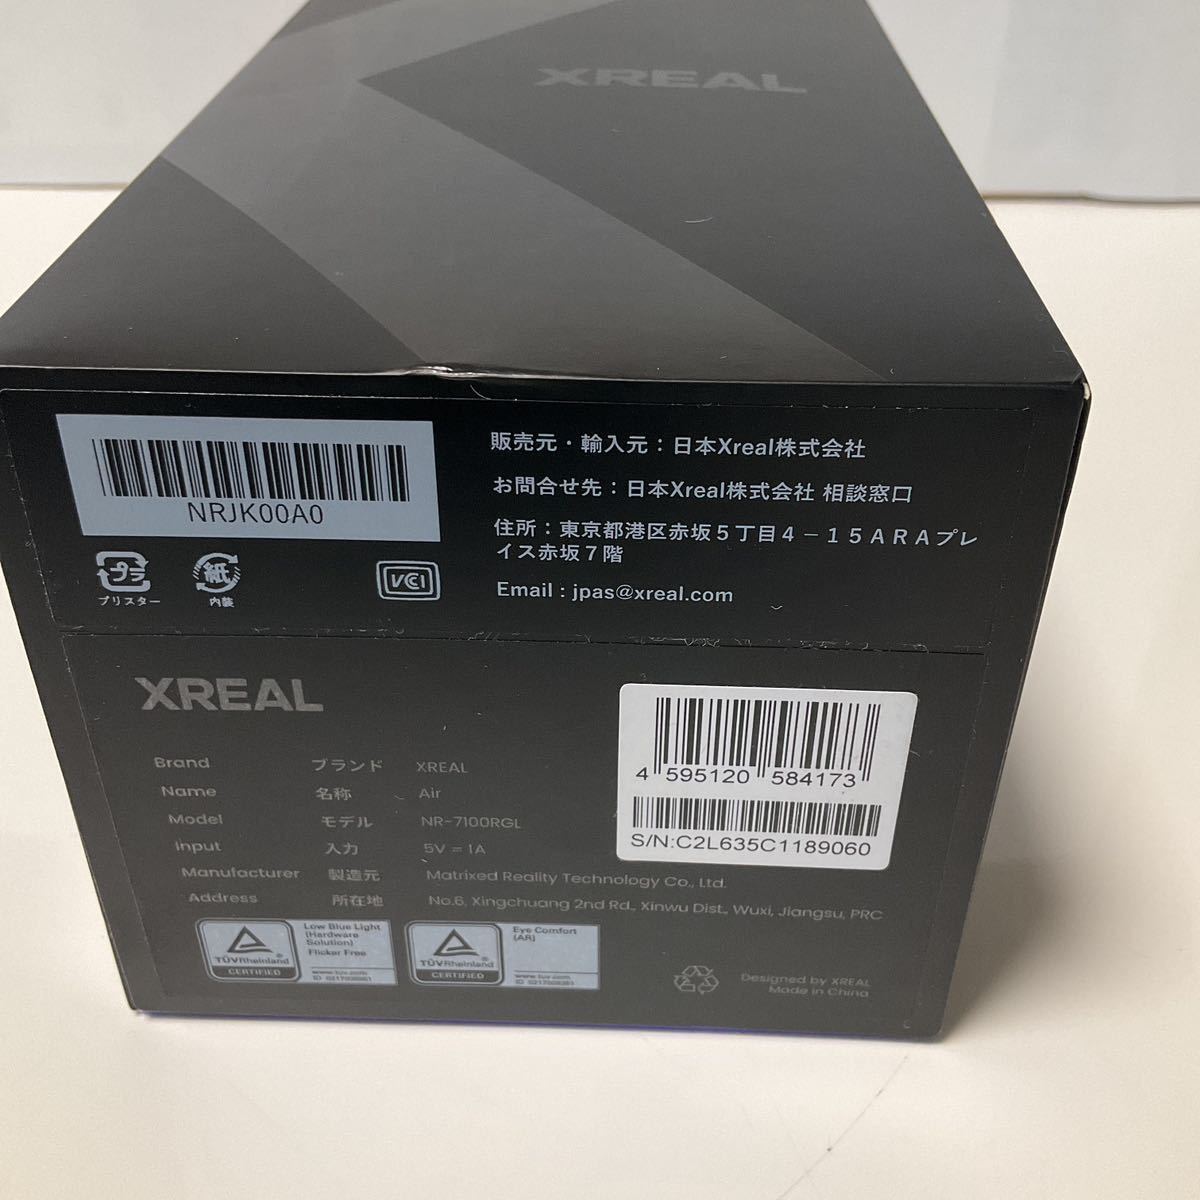 XREAL Air （旧製品名：Nreal Air） AR グラス/スマートグラス